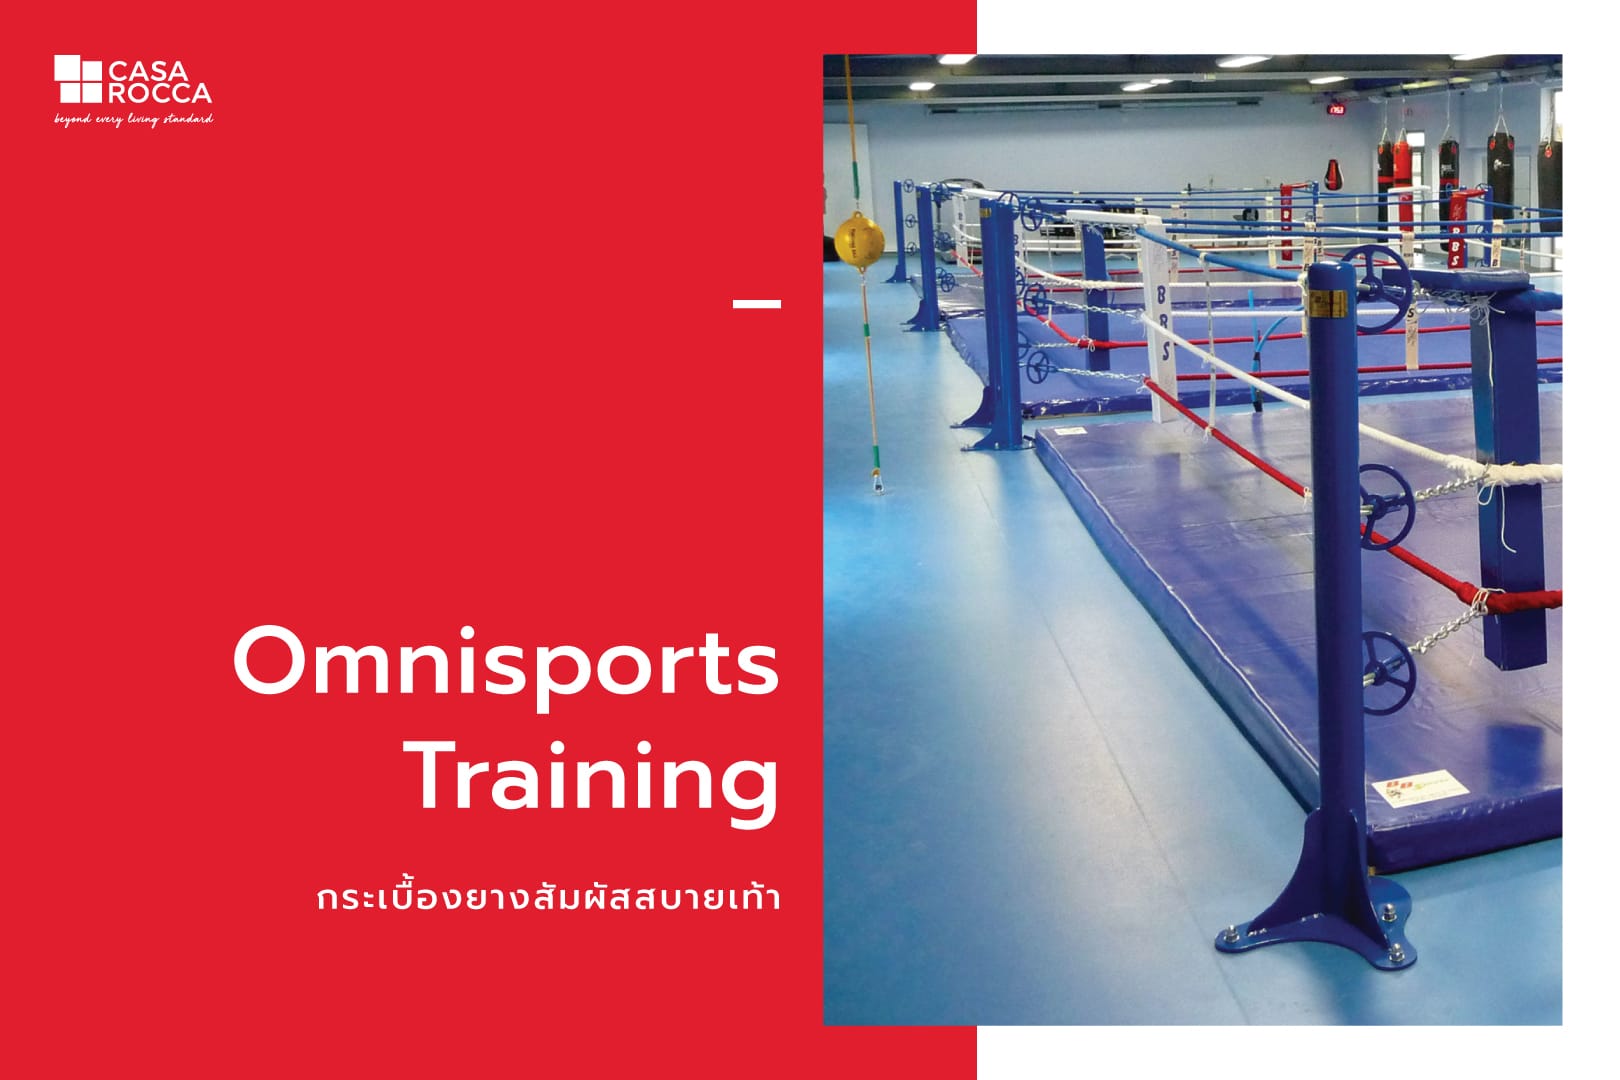 Omnisports Training พื้นกีฬา พื้นสนามกีฬา พื้นสนามกีฬาในร่ม